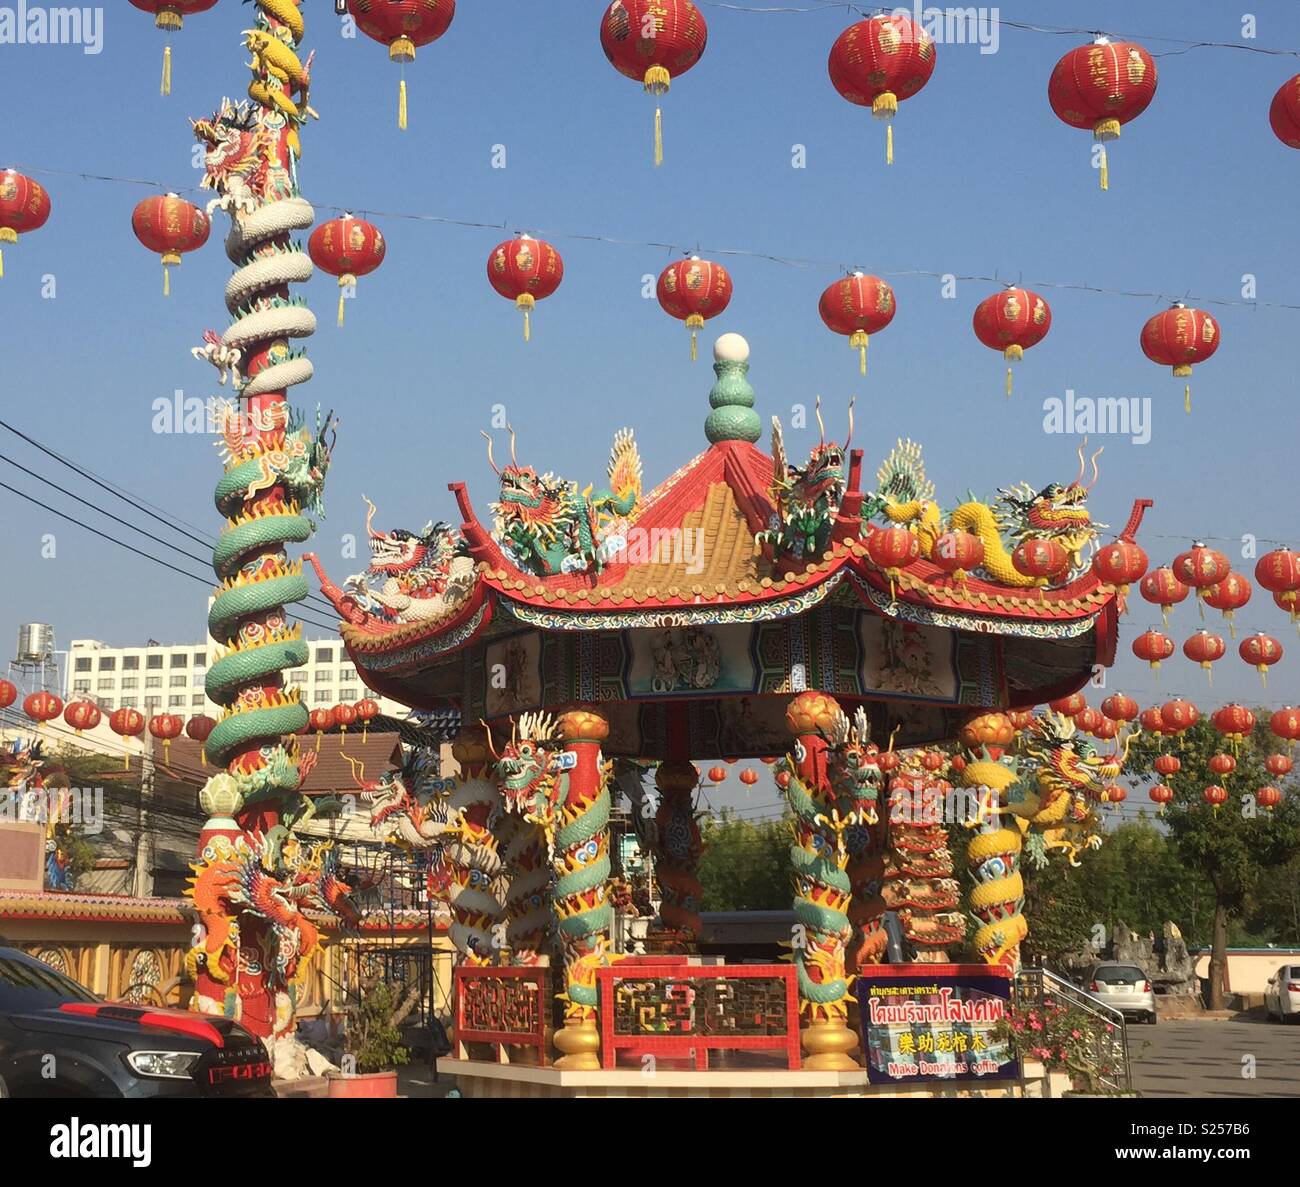 Chinese New Year celebrations Stock Photo